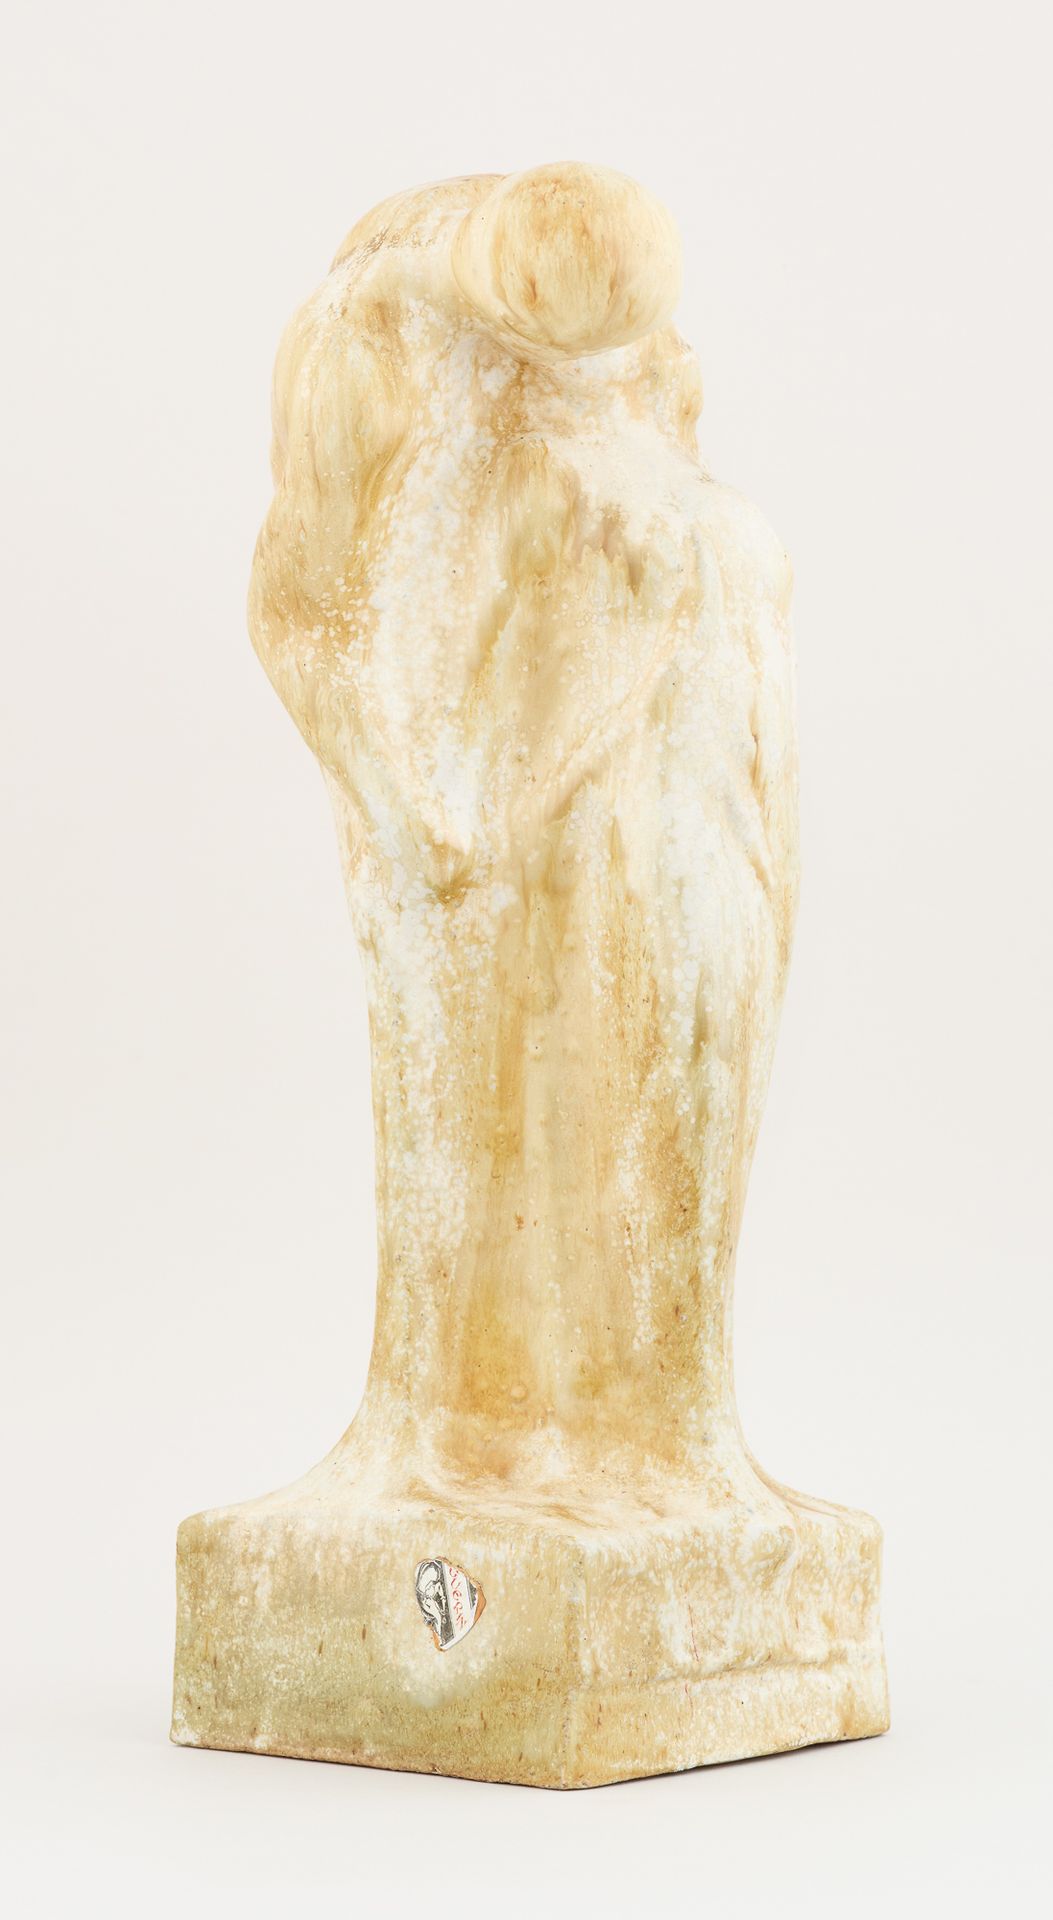 Roger GUERIN École belge (1896-1954) Keramik: Skulptur "Der Kuss" aus glasiertem&hellip;